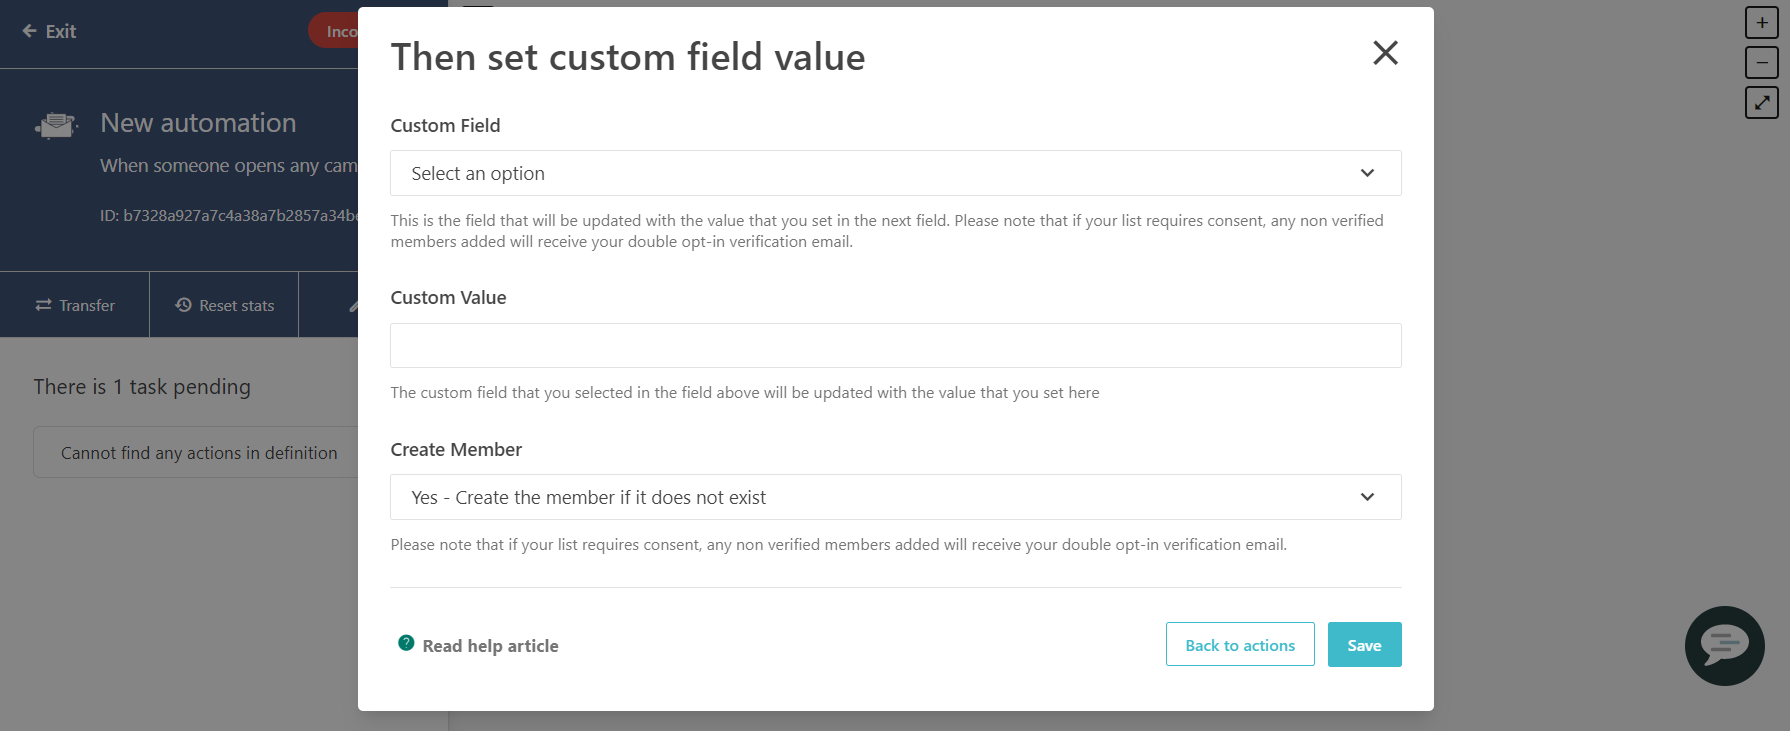 Set a custom field value dialog